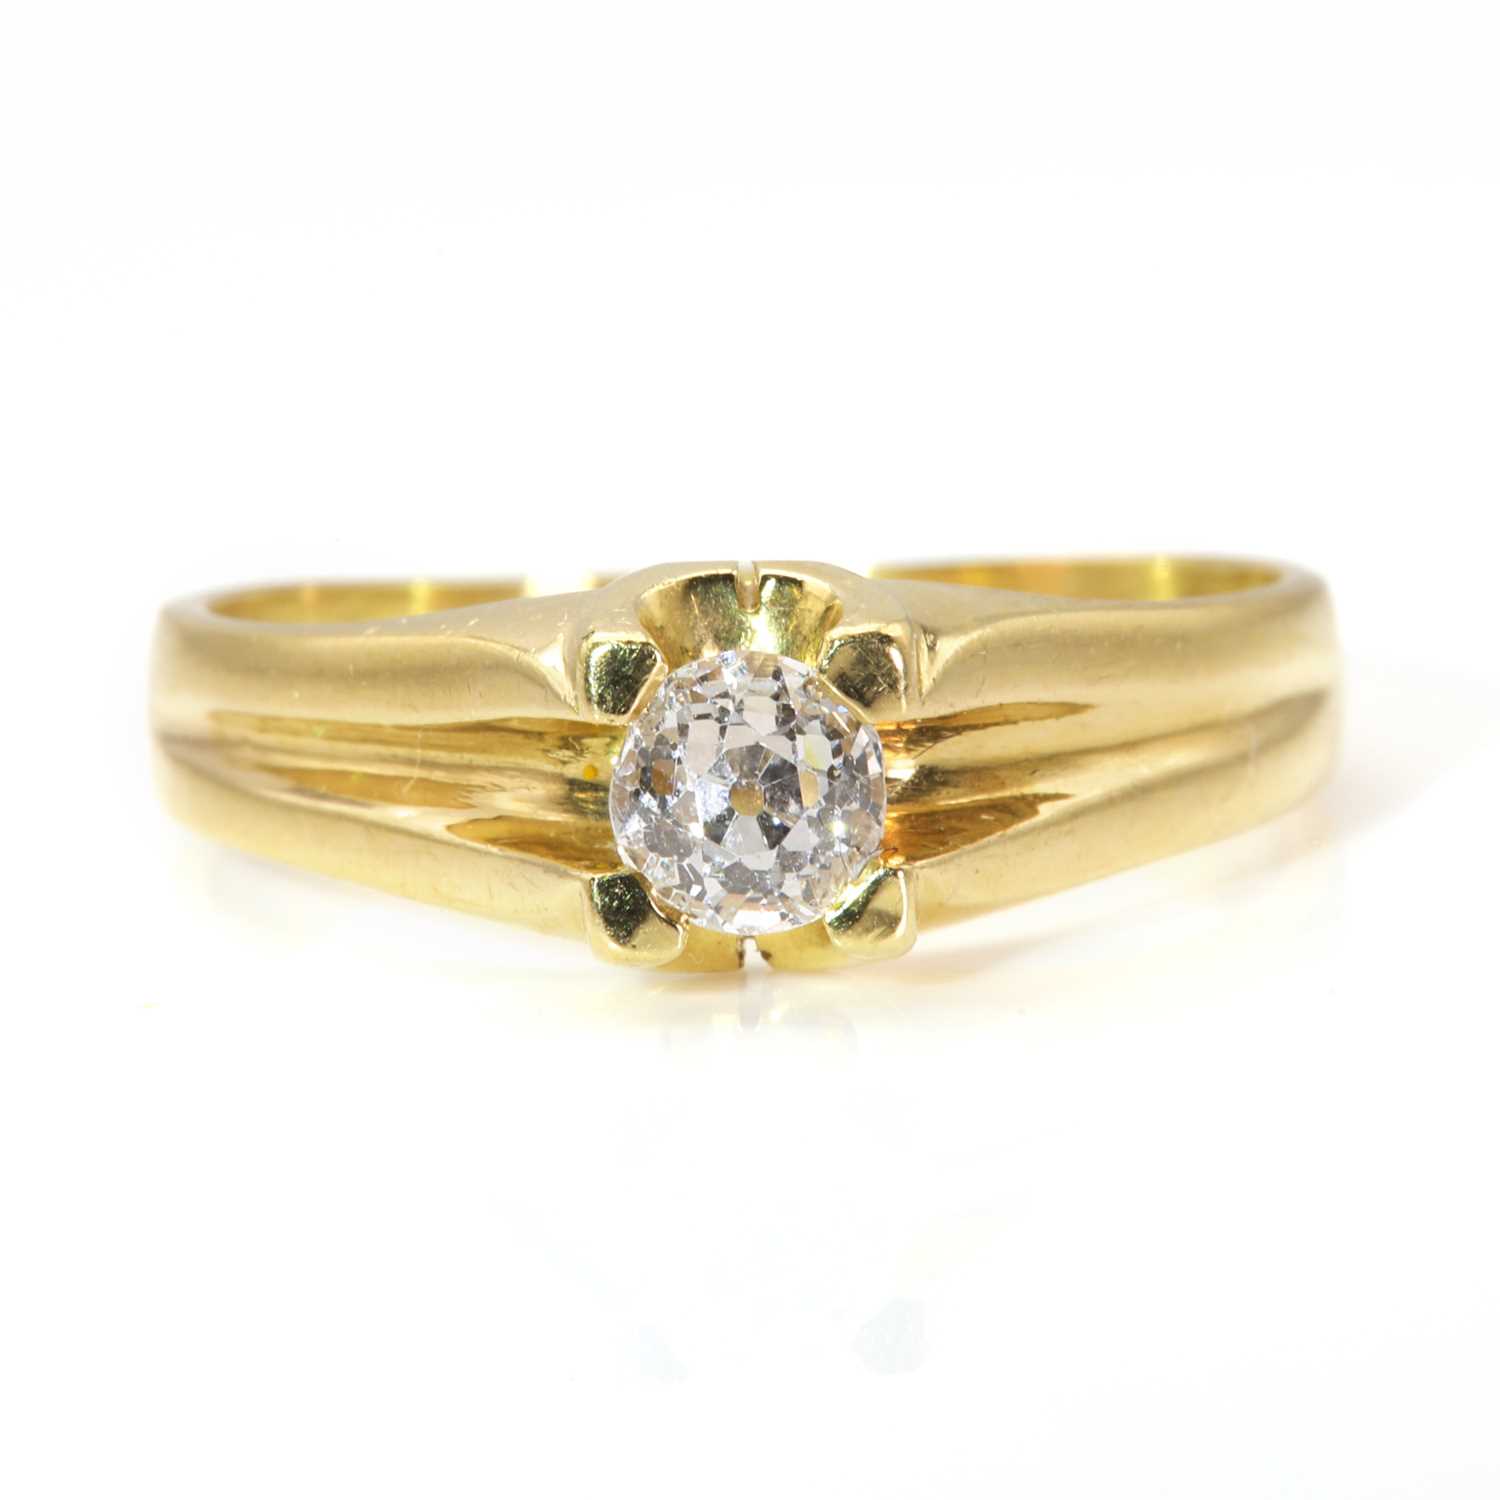 An 18ct gold gentlemen's single stone diamond ring,